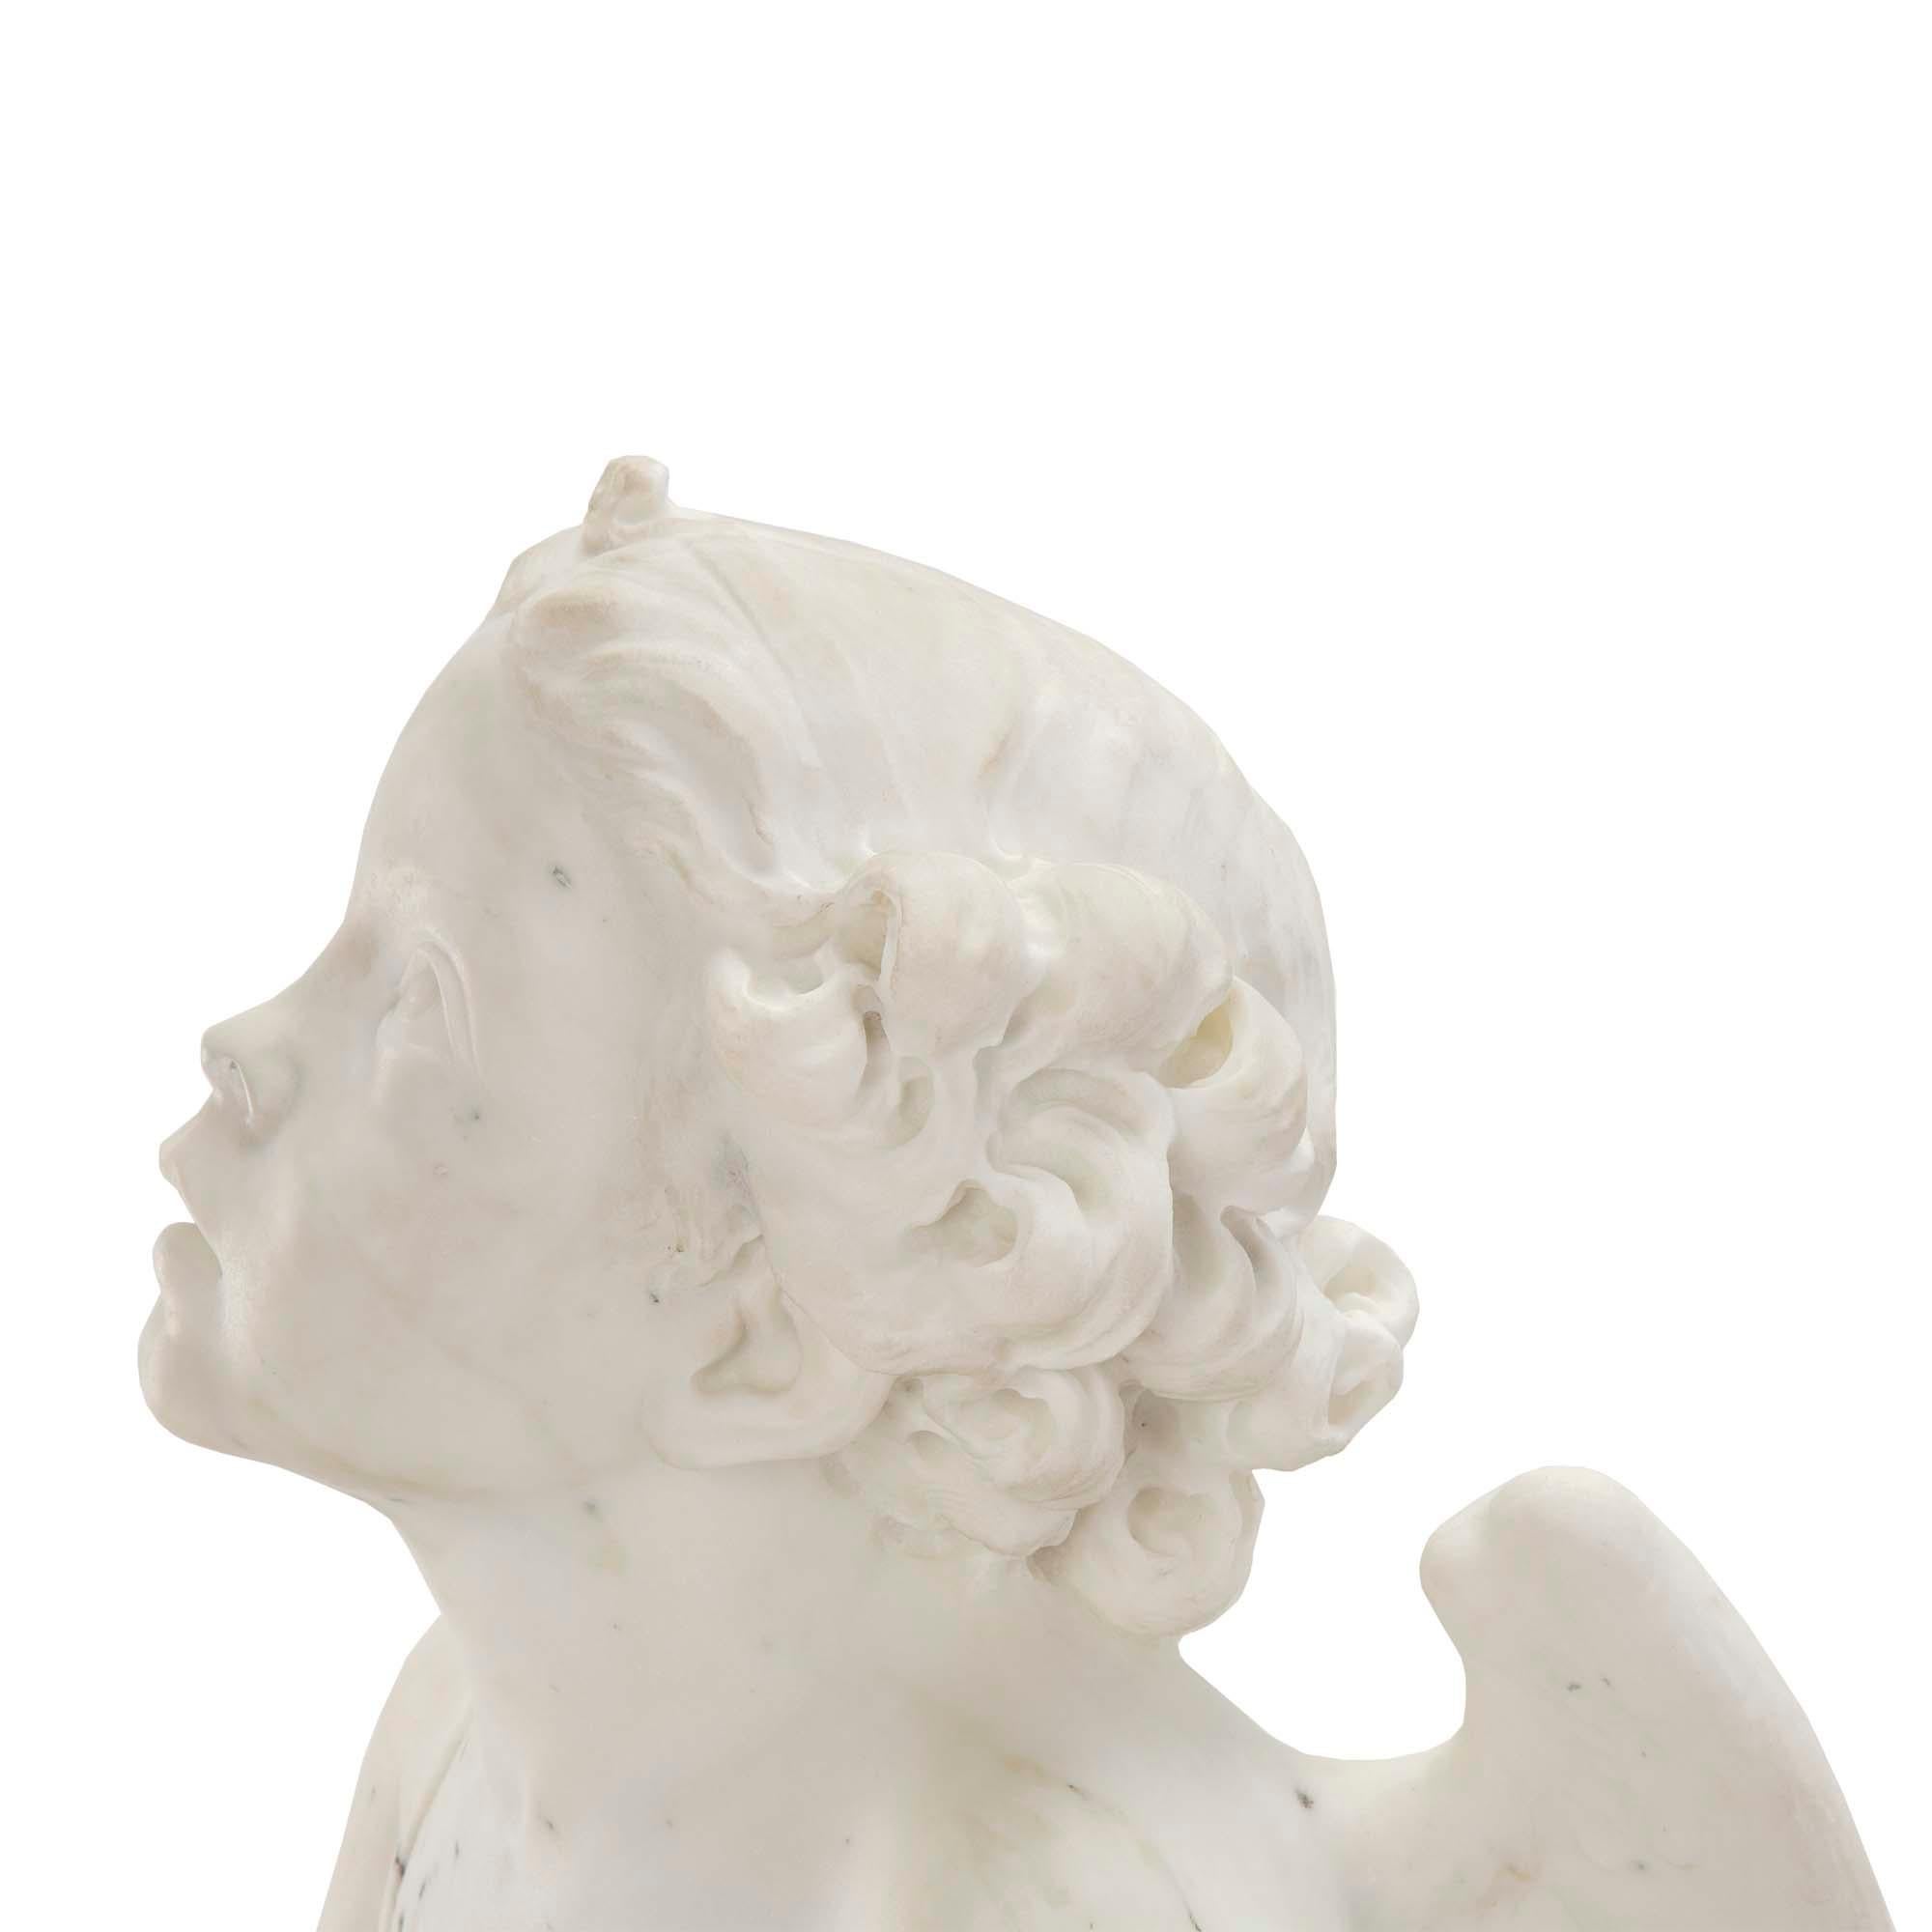 Italian 19th Century White Carrara Marble Statue of a Little Winged Cherub For Sale 2